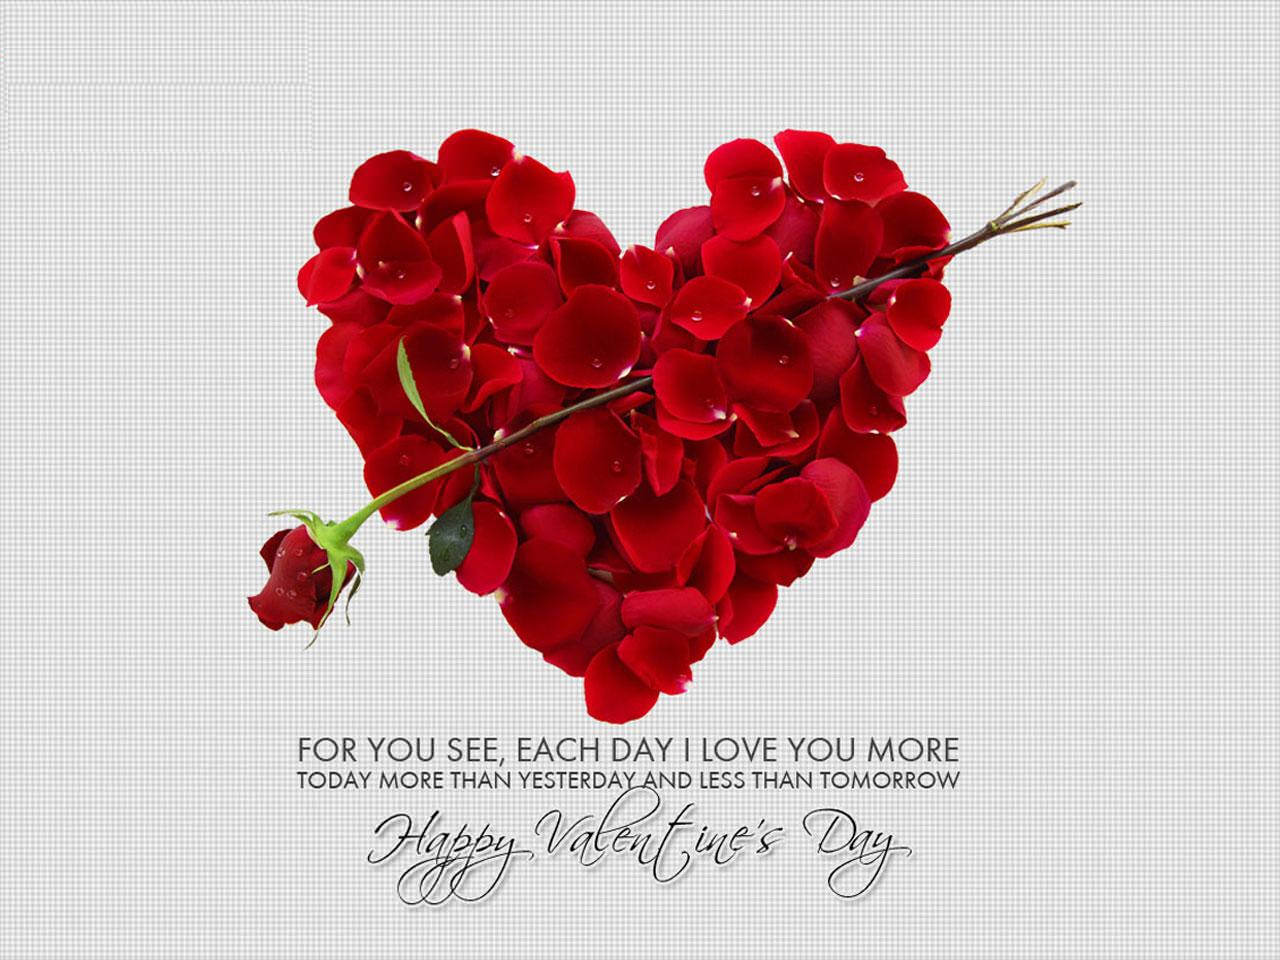 Valentine's Day Wallpaper in PSD .freecreatives.com